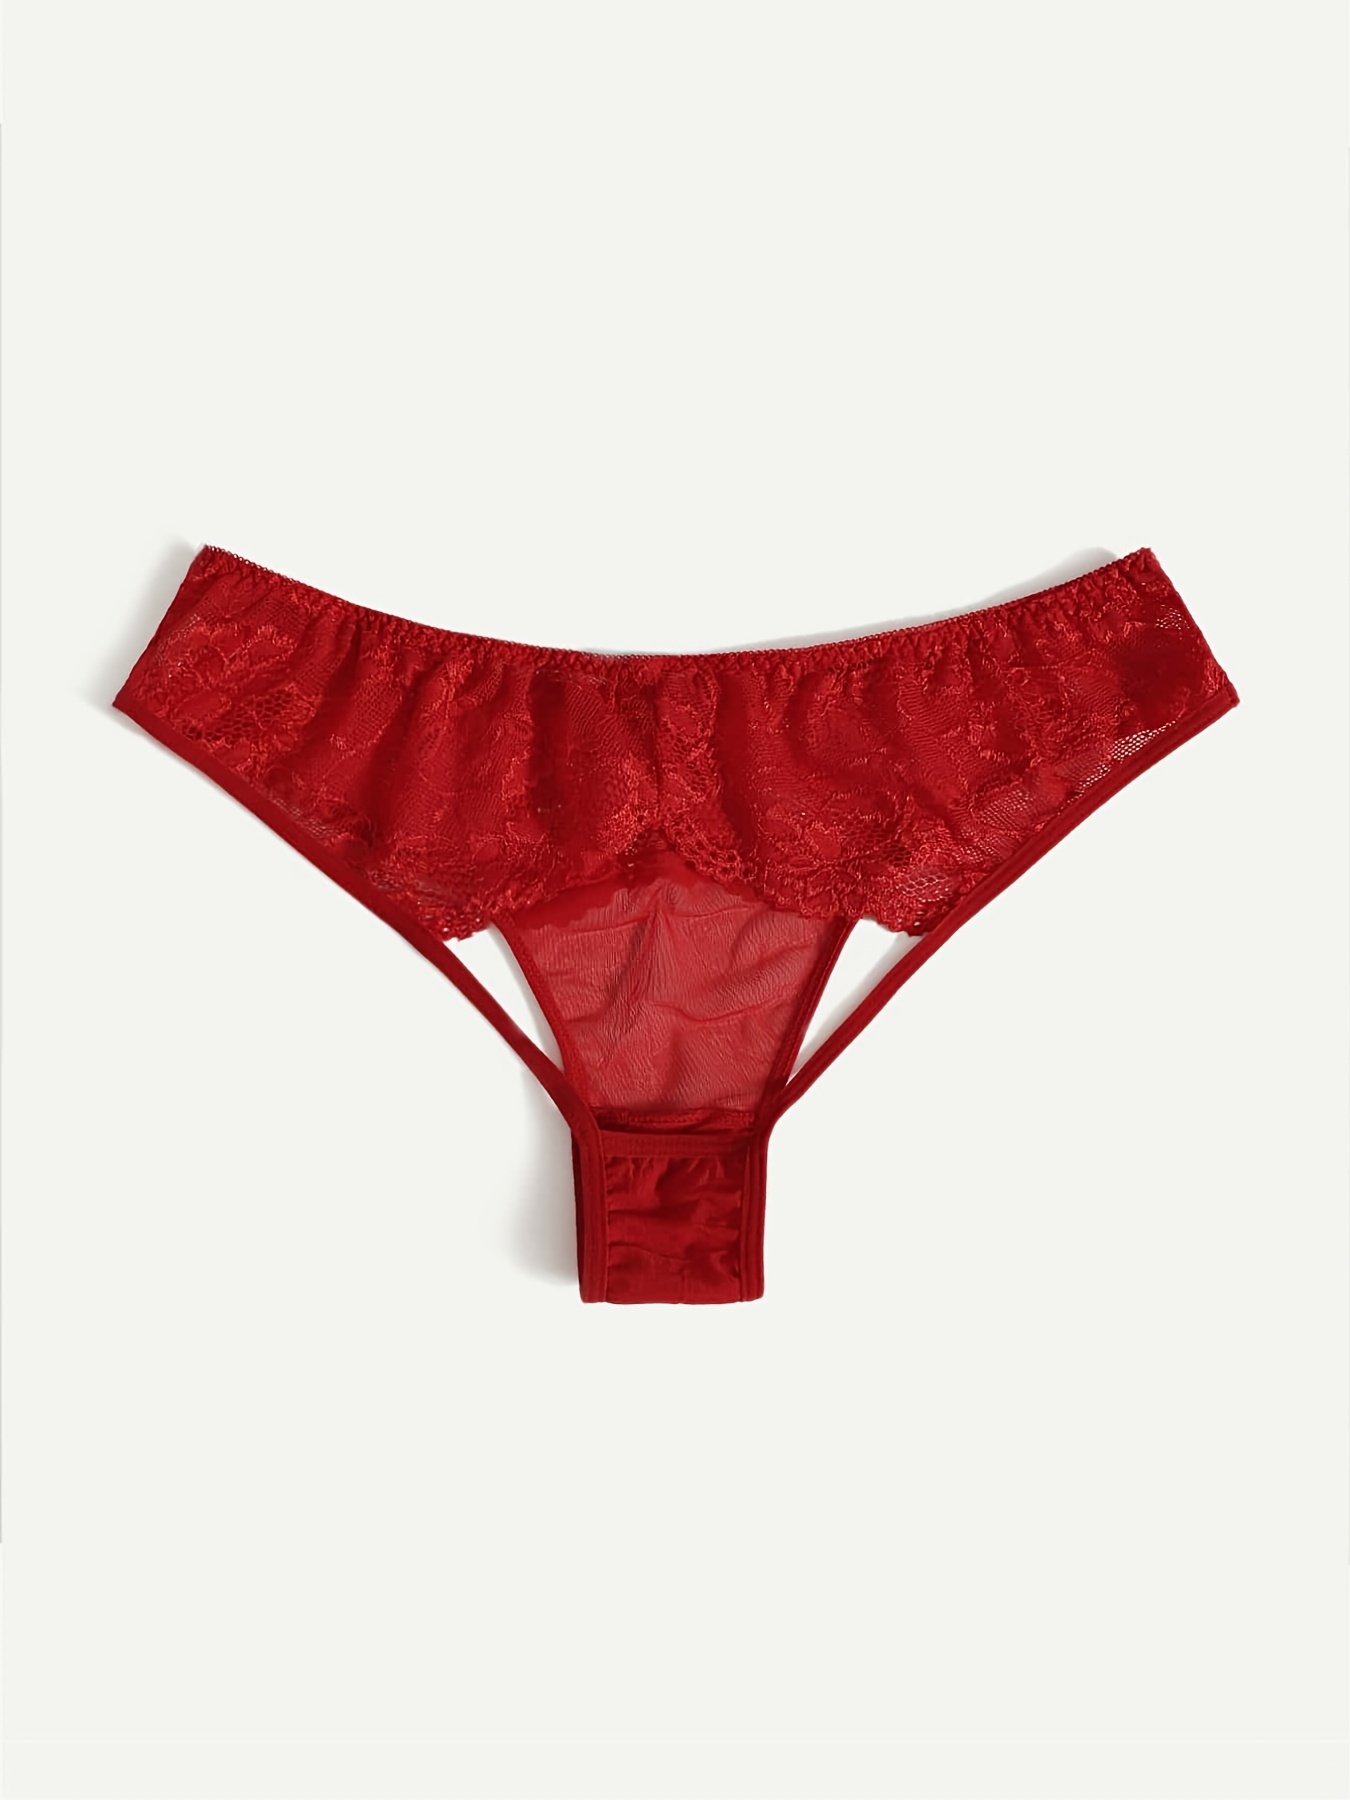 Plus Size Crotchless Panties Transparent Women's Thong Underwear